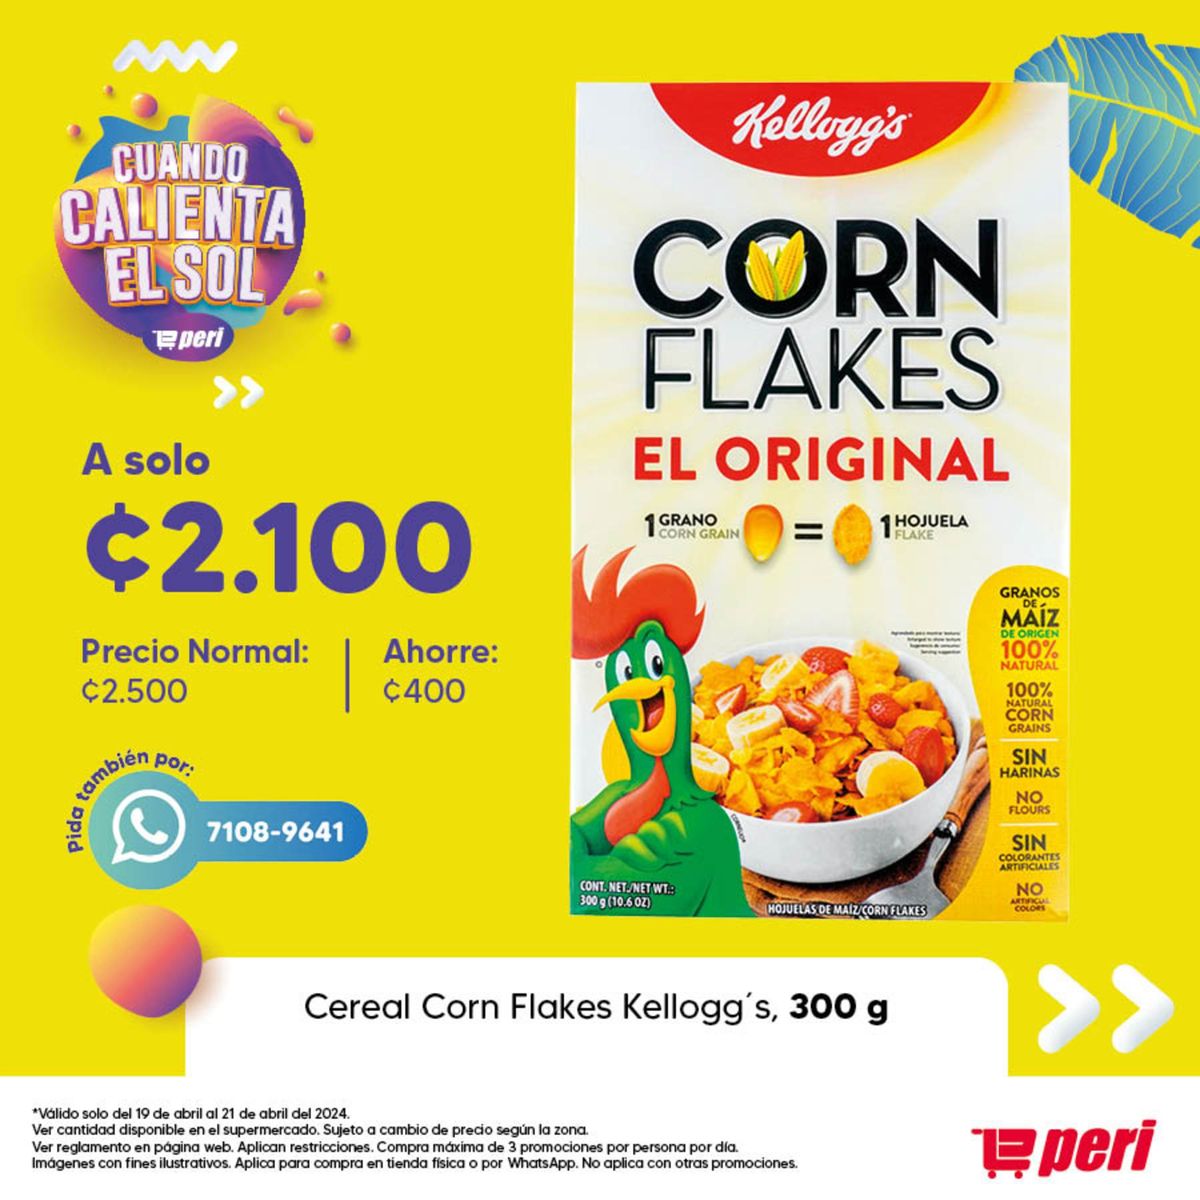 Cereal Corn Flakes Kellogg's, 300g por solo R$21,00